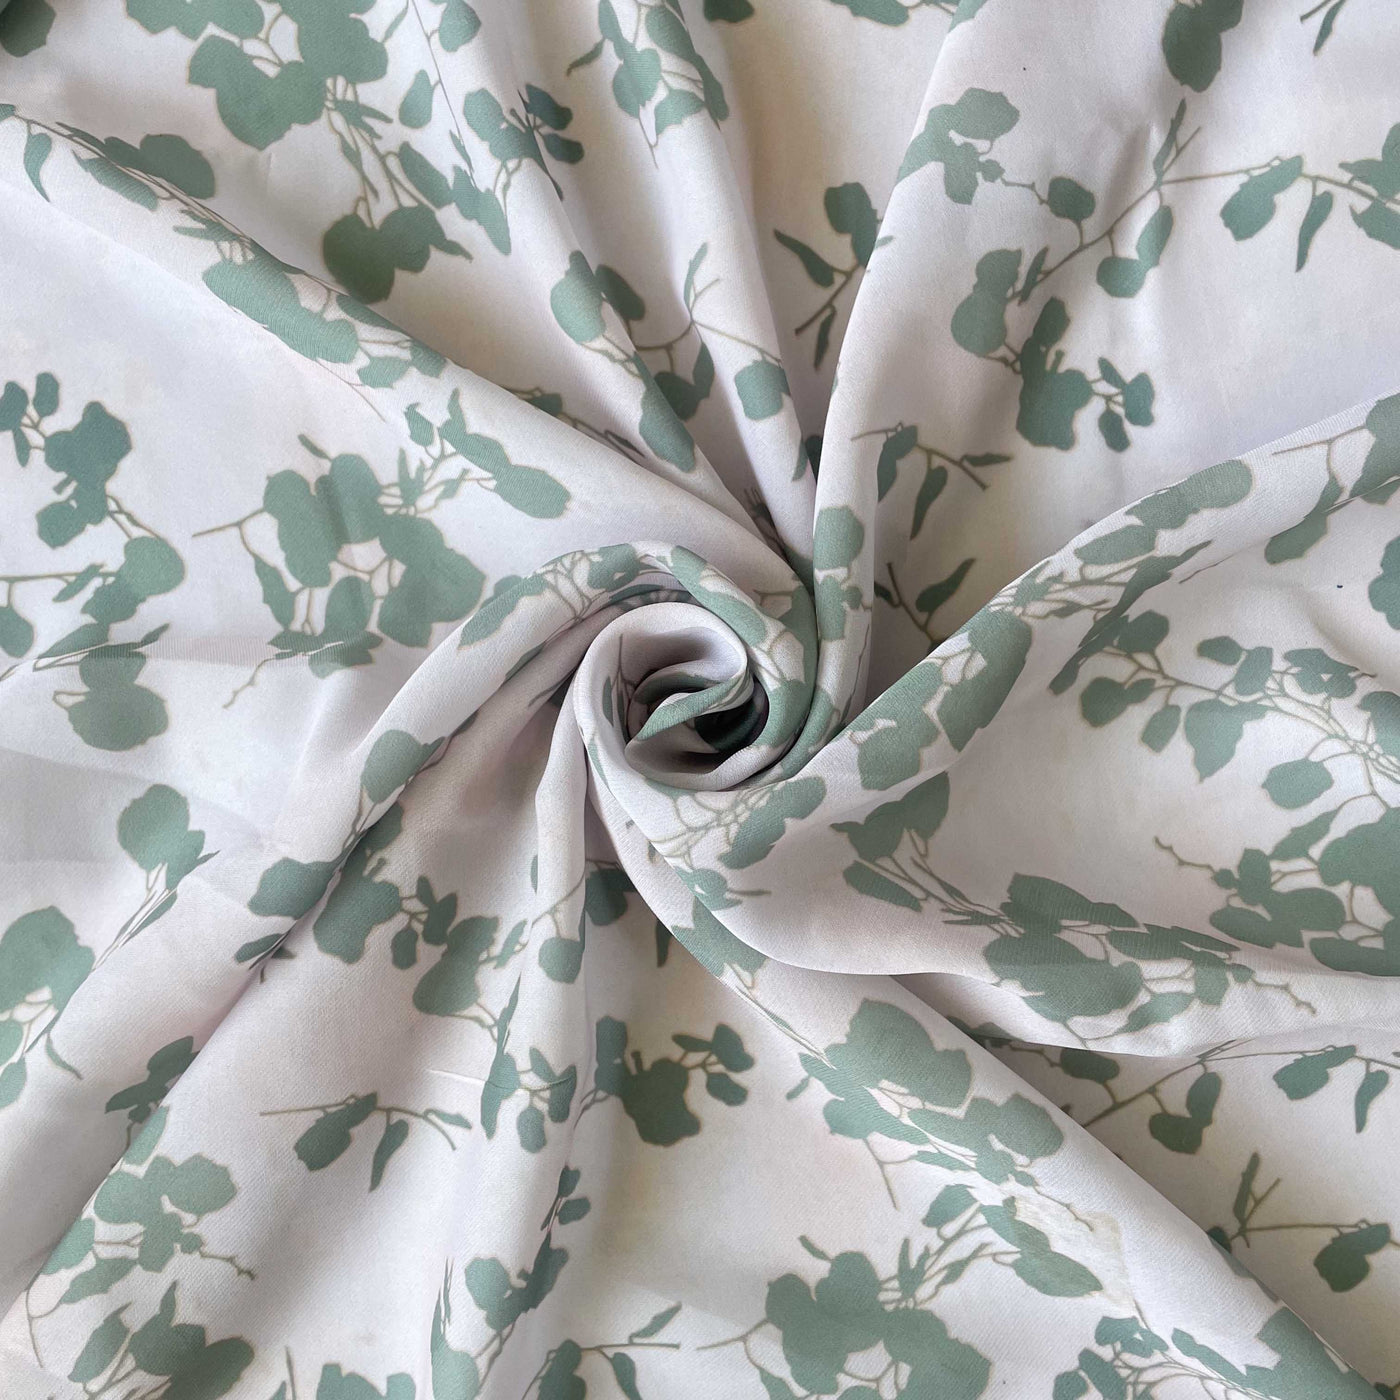 Digital Printed Burberry Silk Fabric Fabric Dull Green Abstract Floral Printed Burberry Silk Fabric (Width 45 Inches)